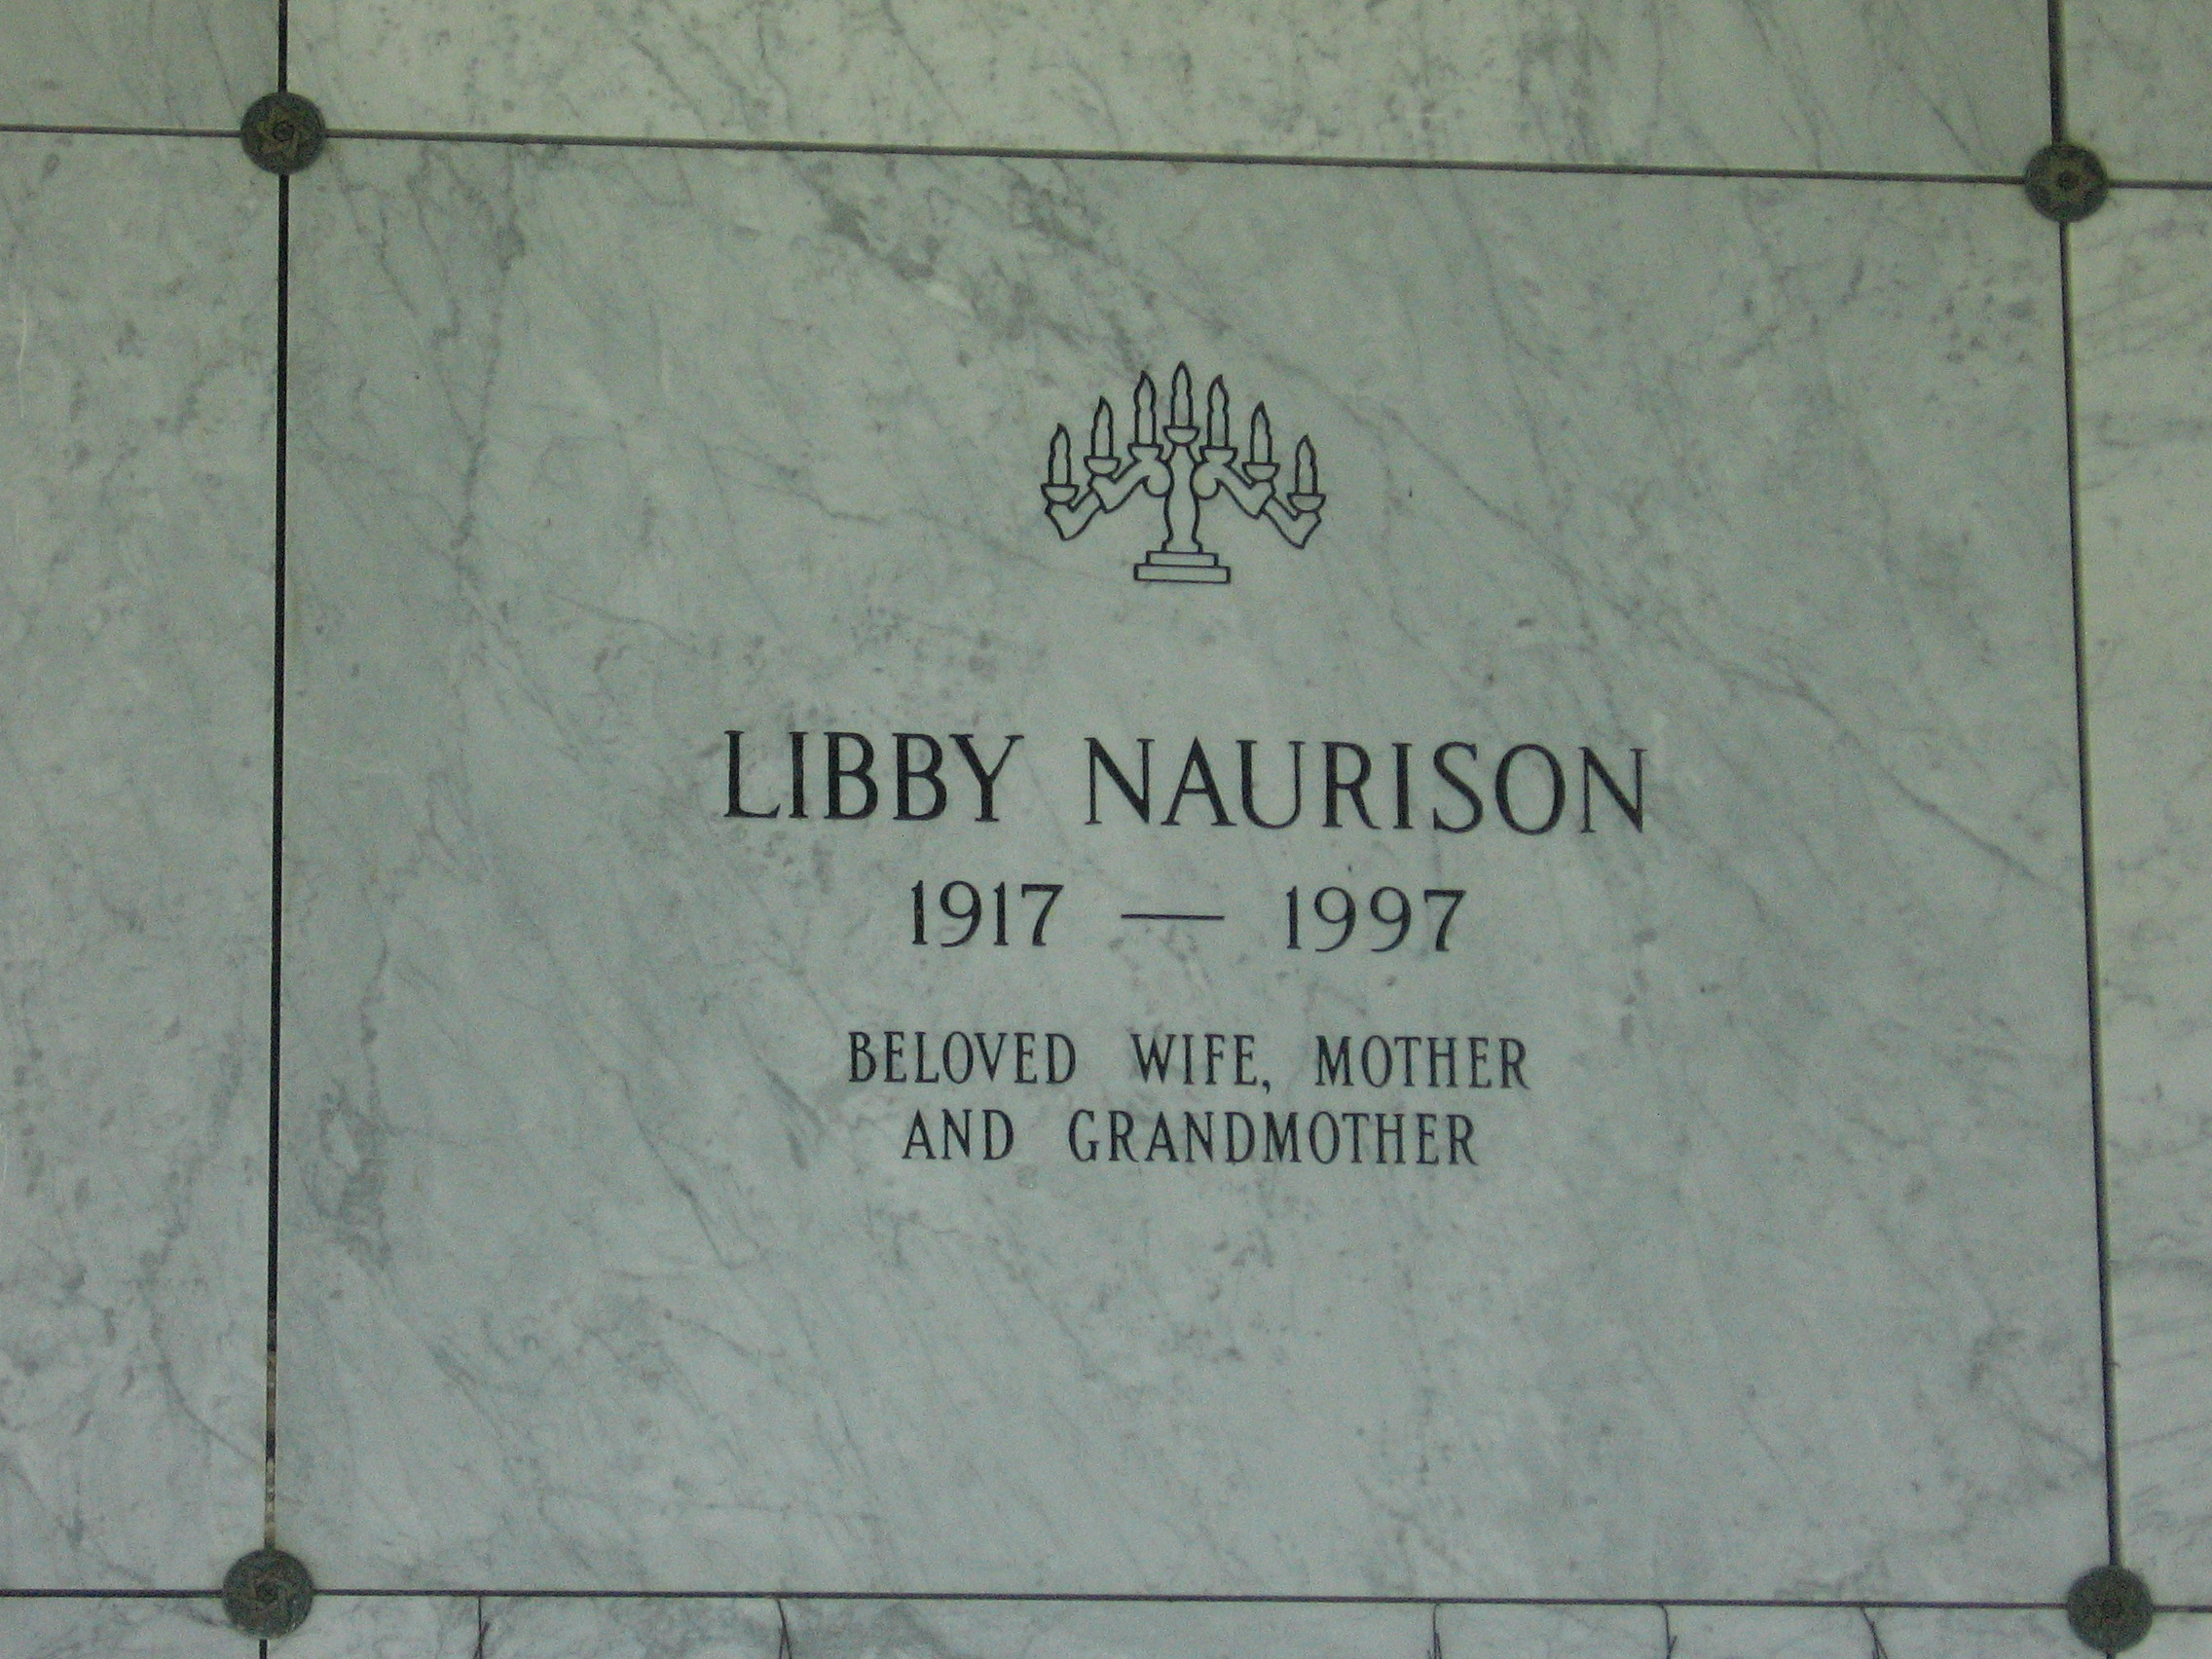 Libby Naurison